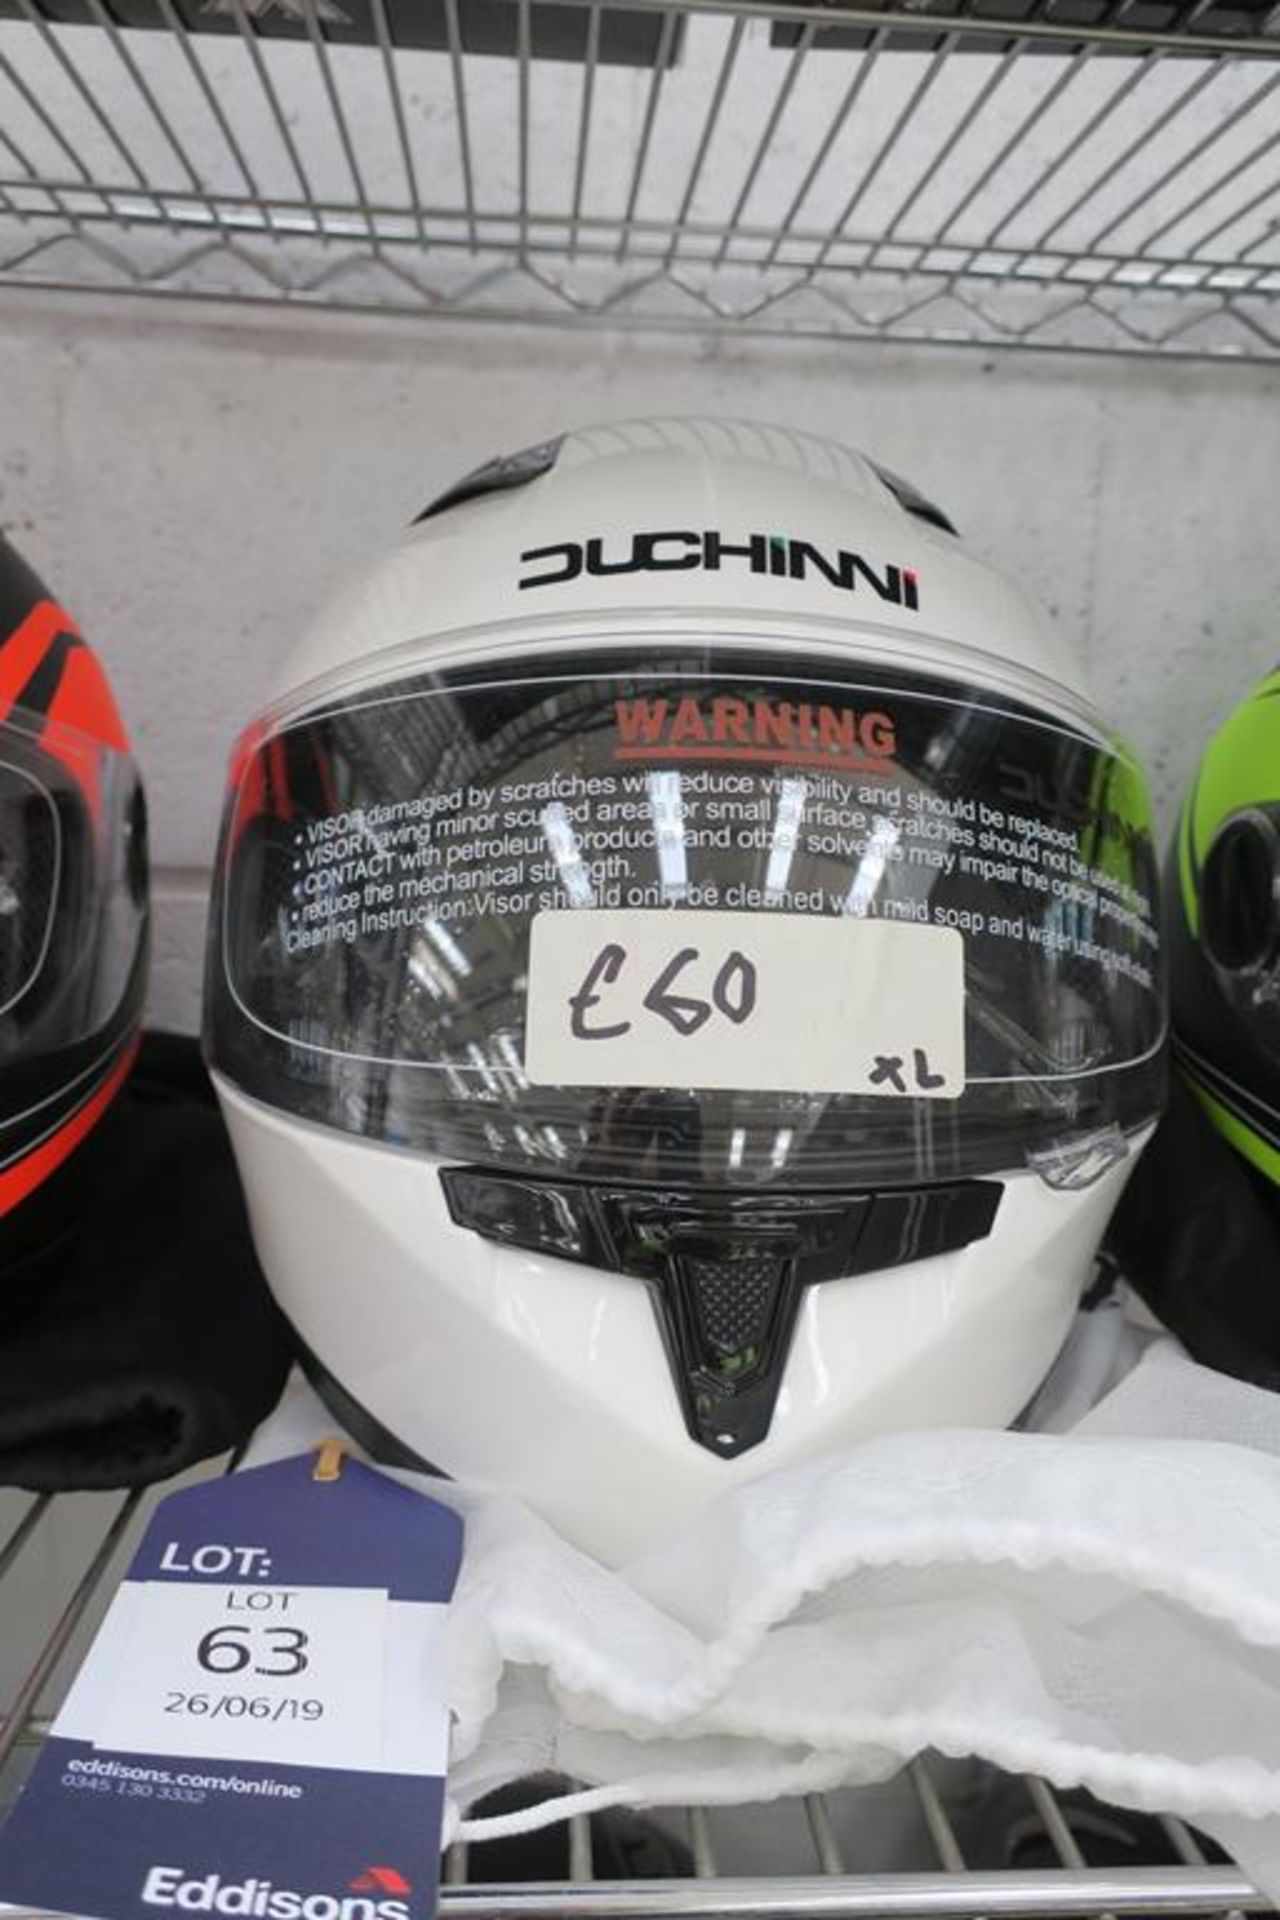 Duchinni YH-FF968 Size XL Helmet comes with HJC Helmet Bag